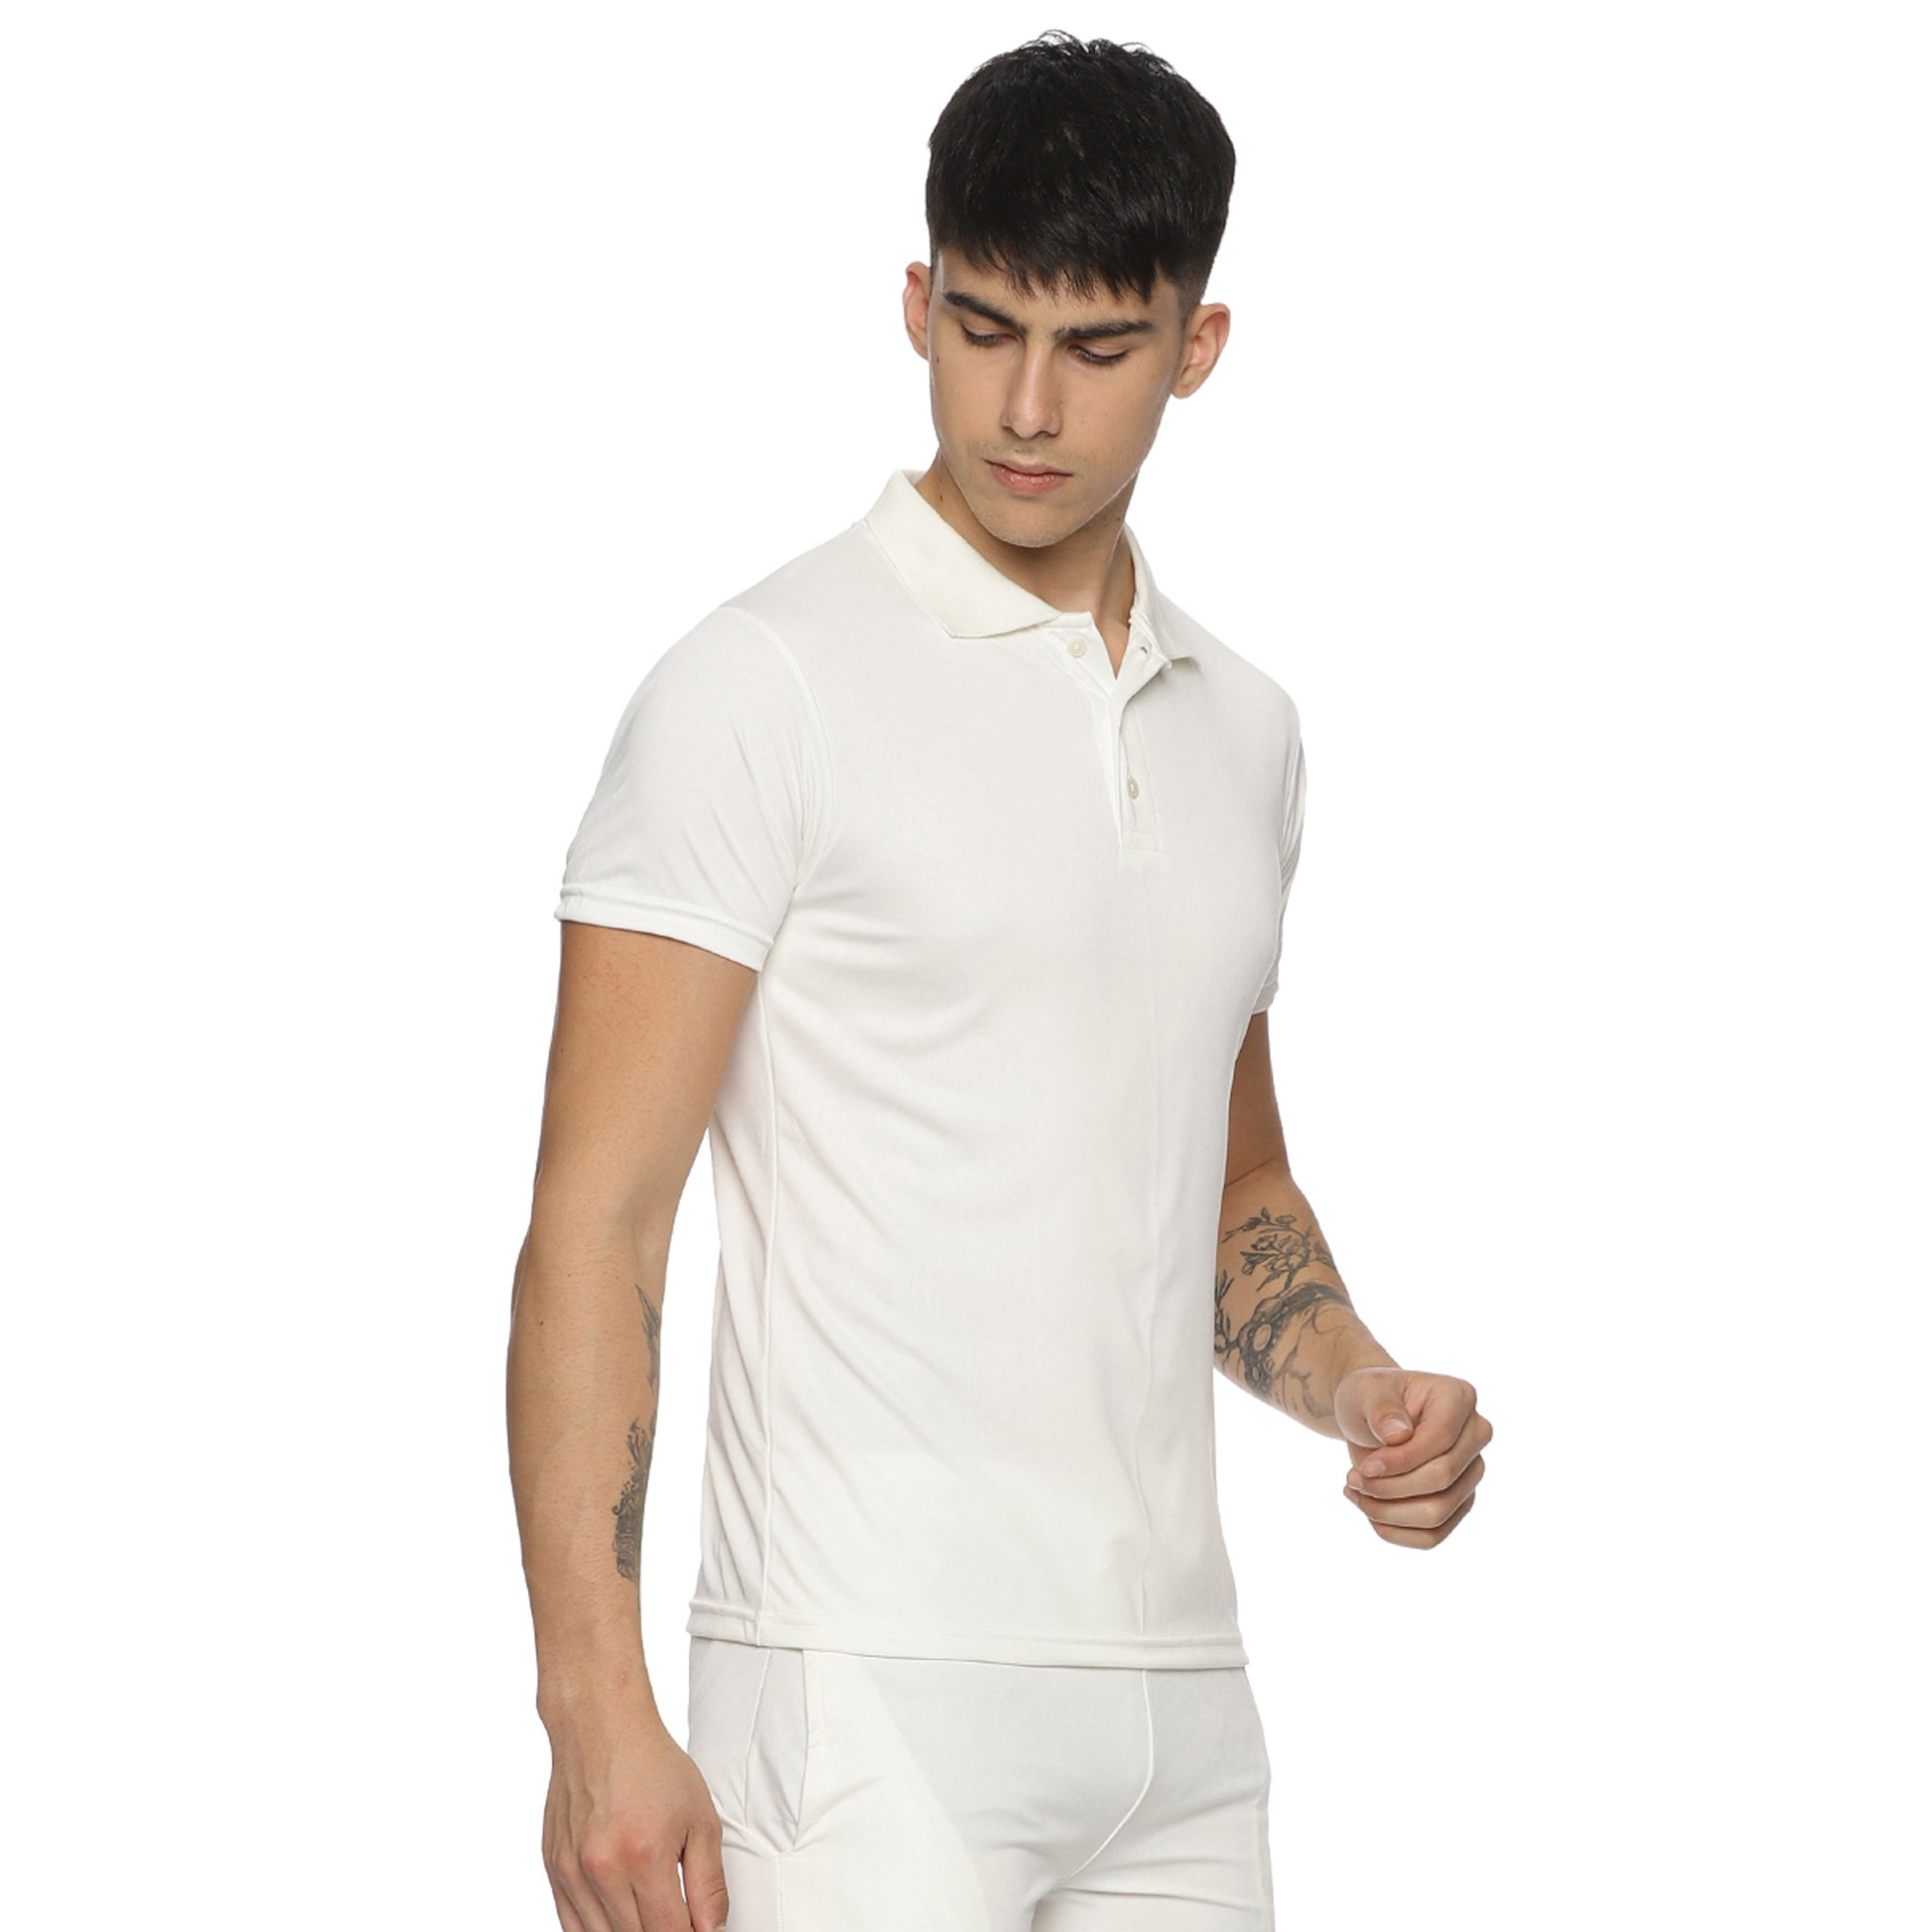 Prokick Ignite Half Sleeves Cricket T-Shirt, Off White - Best Price online Prokicksports.com